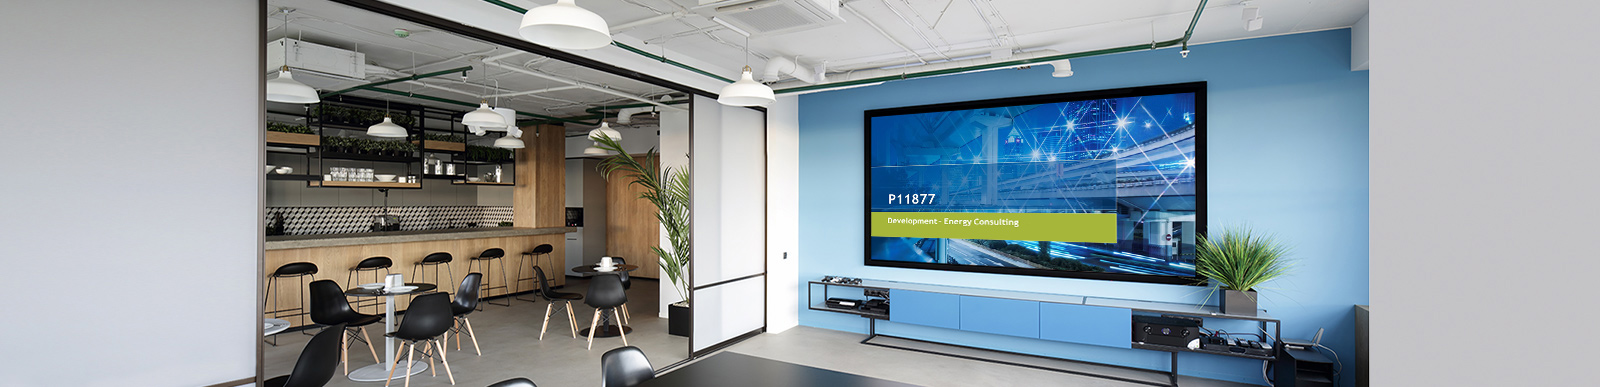 Slide projector in high-tech blue room